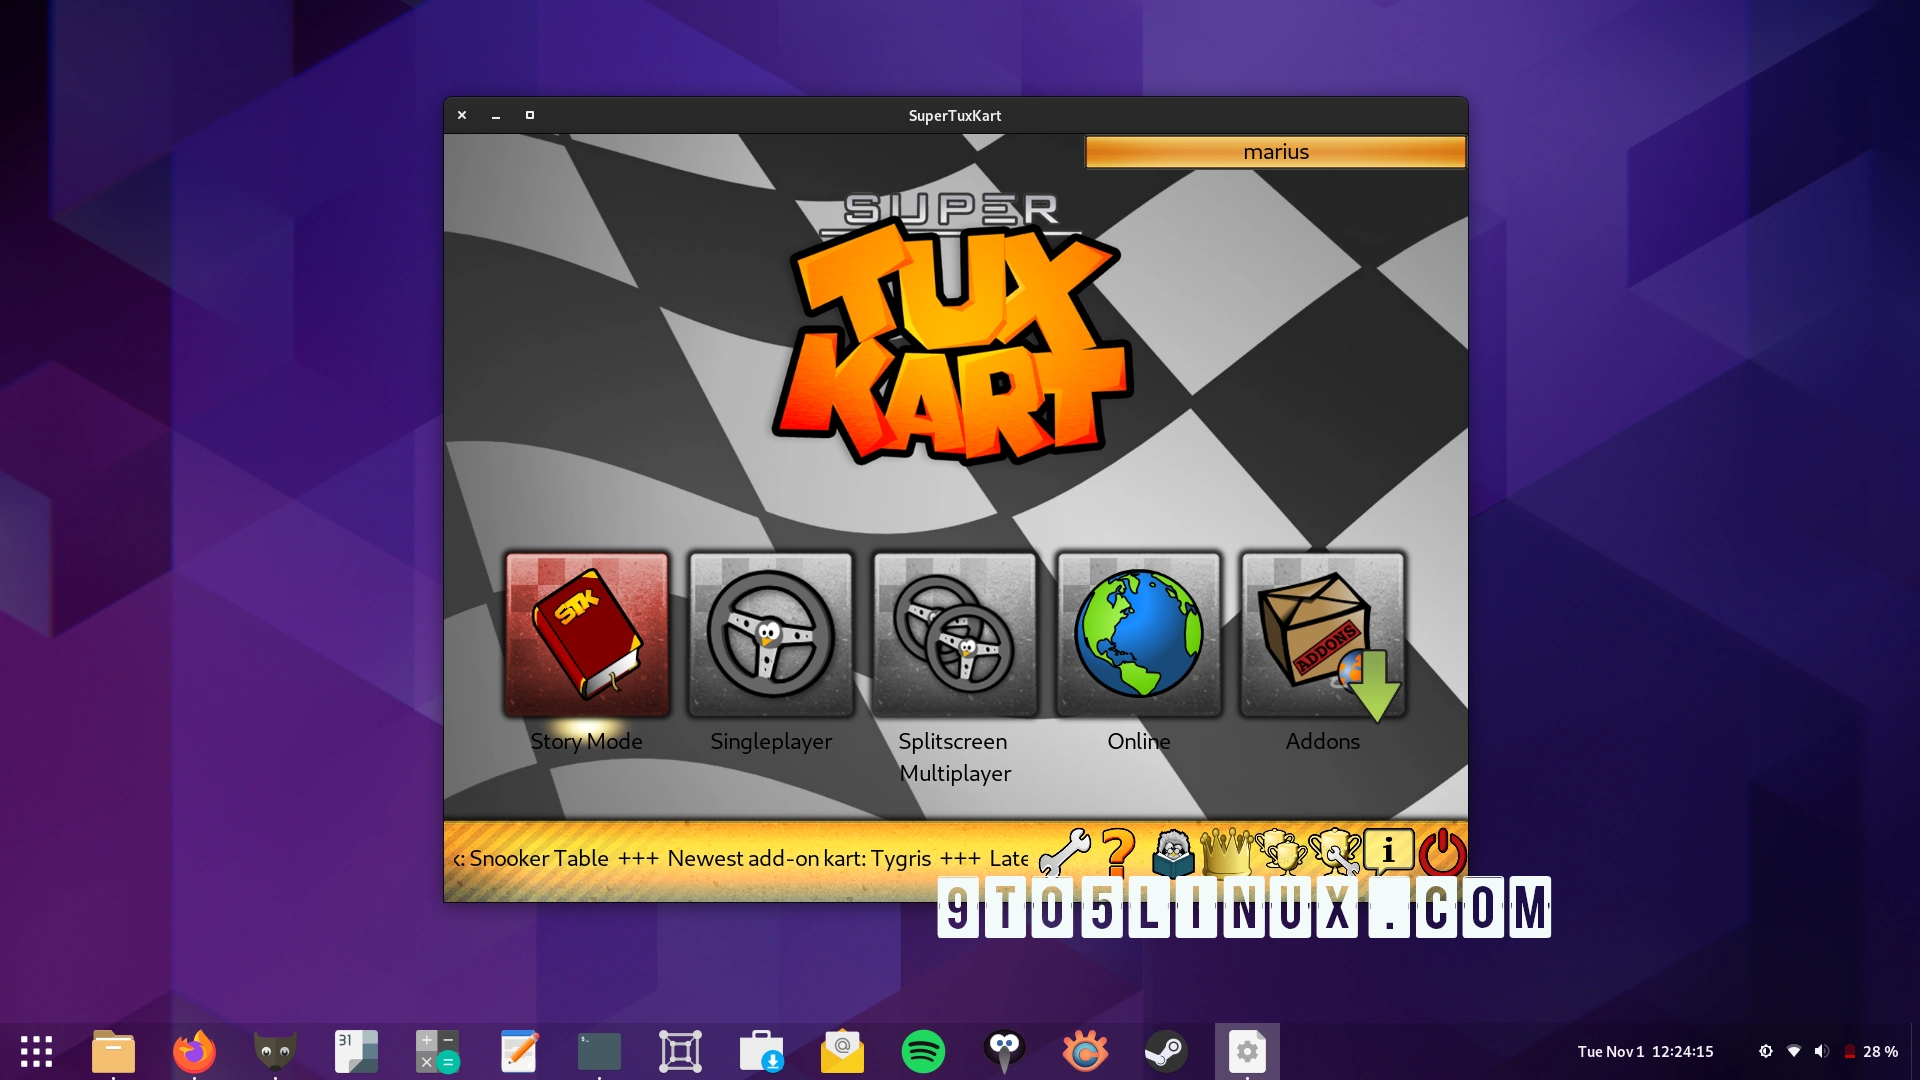 SuperTuxKart 1.4 Kart Racing Game Released with New Textures and Karts, Vulkan Renderer